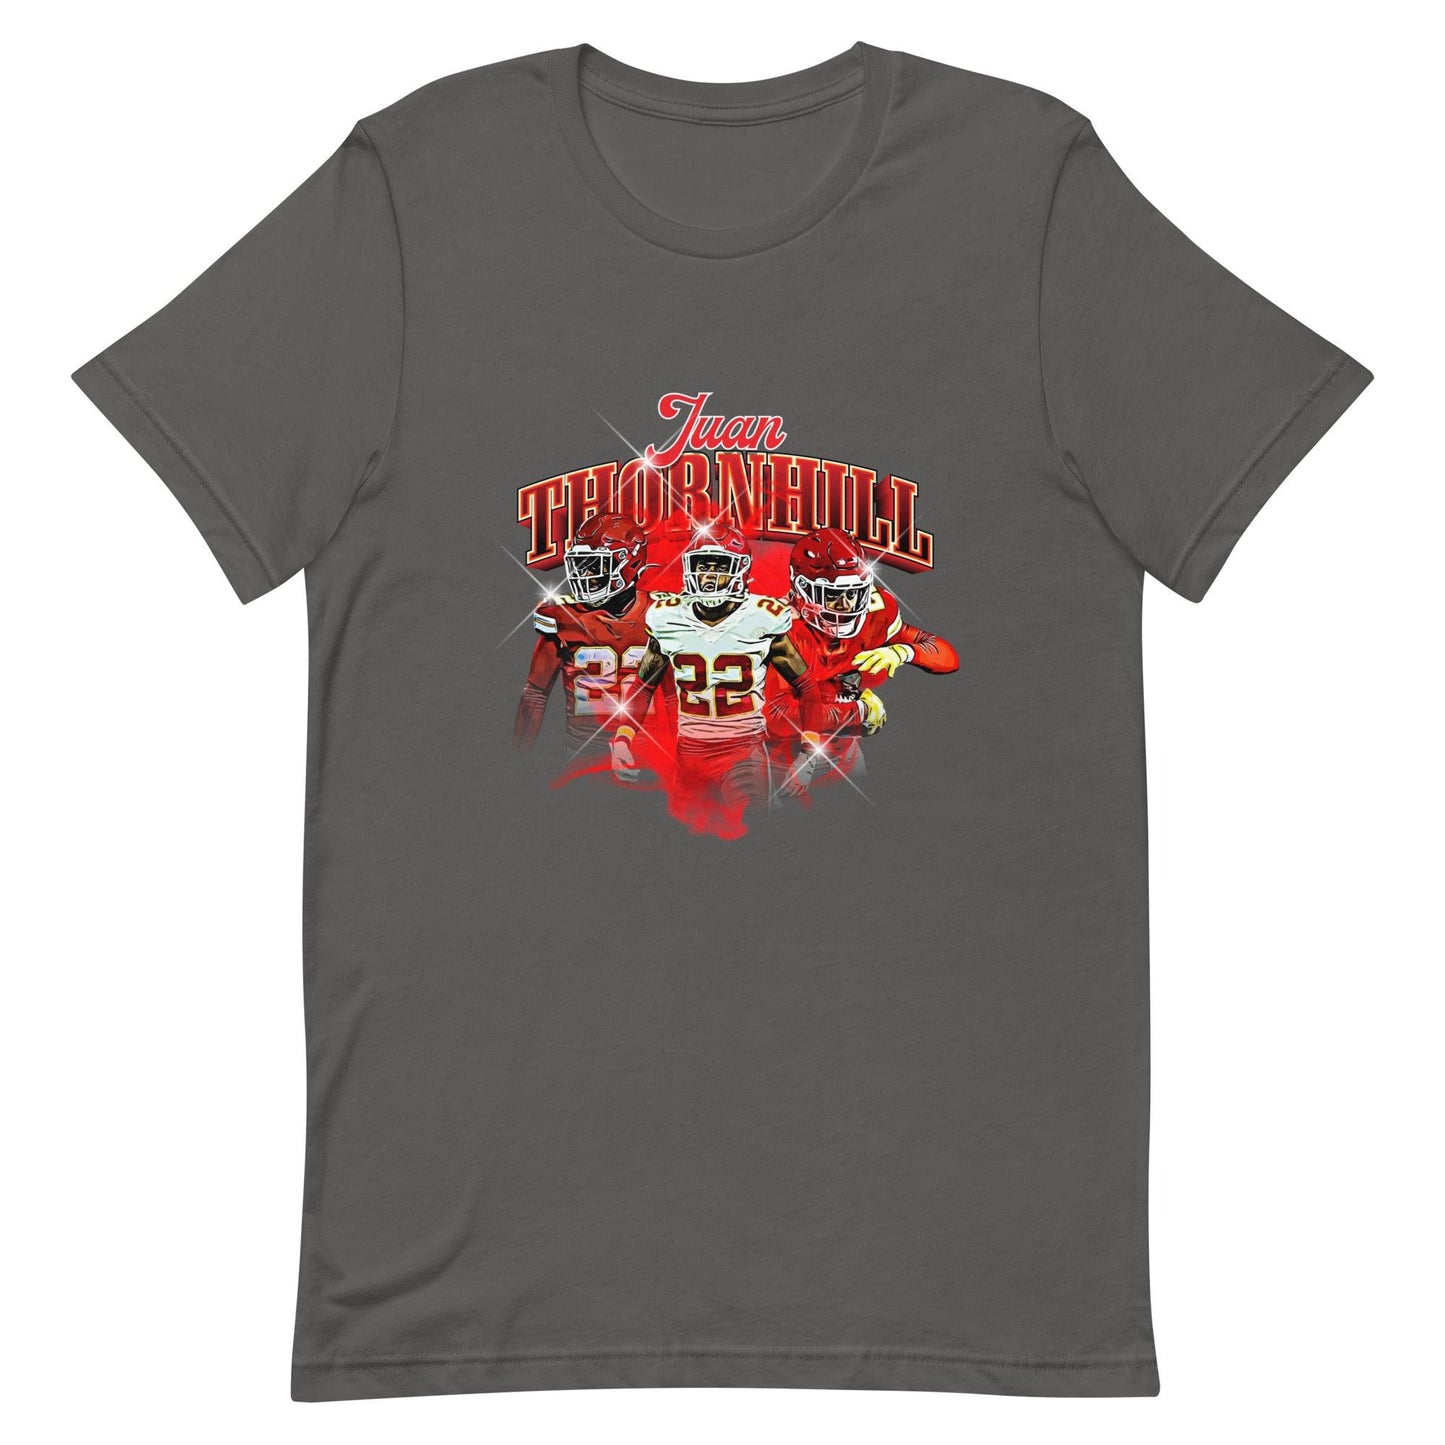 Juan Thornhill "Legacy" t-shirt - Fan Arch